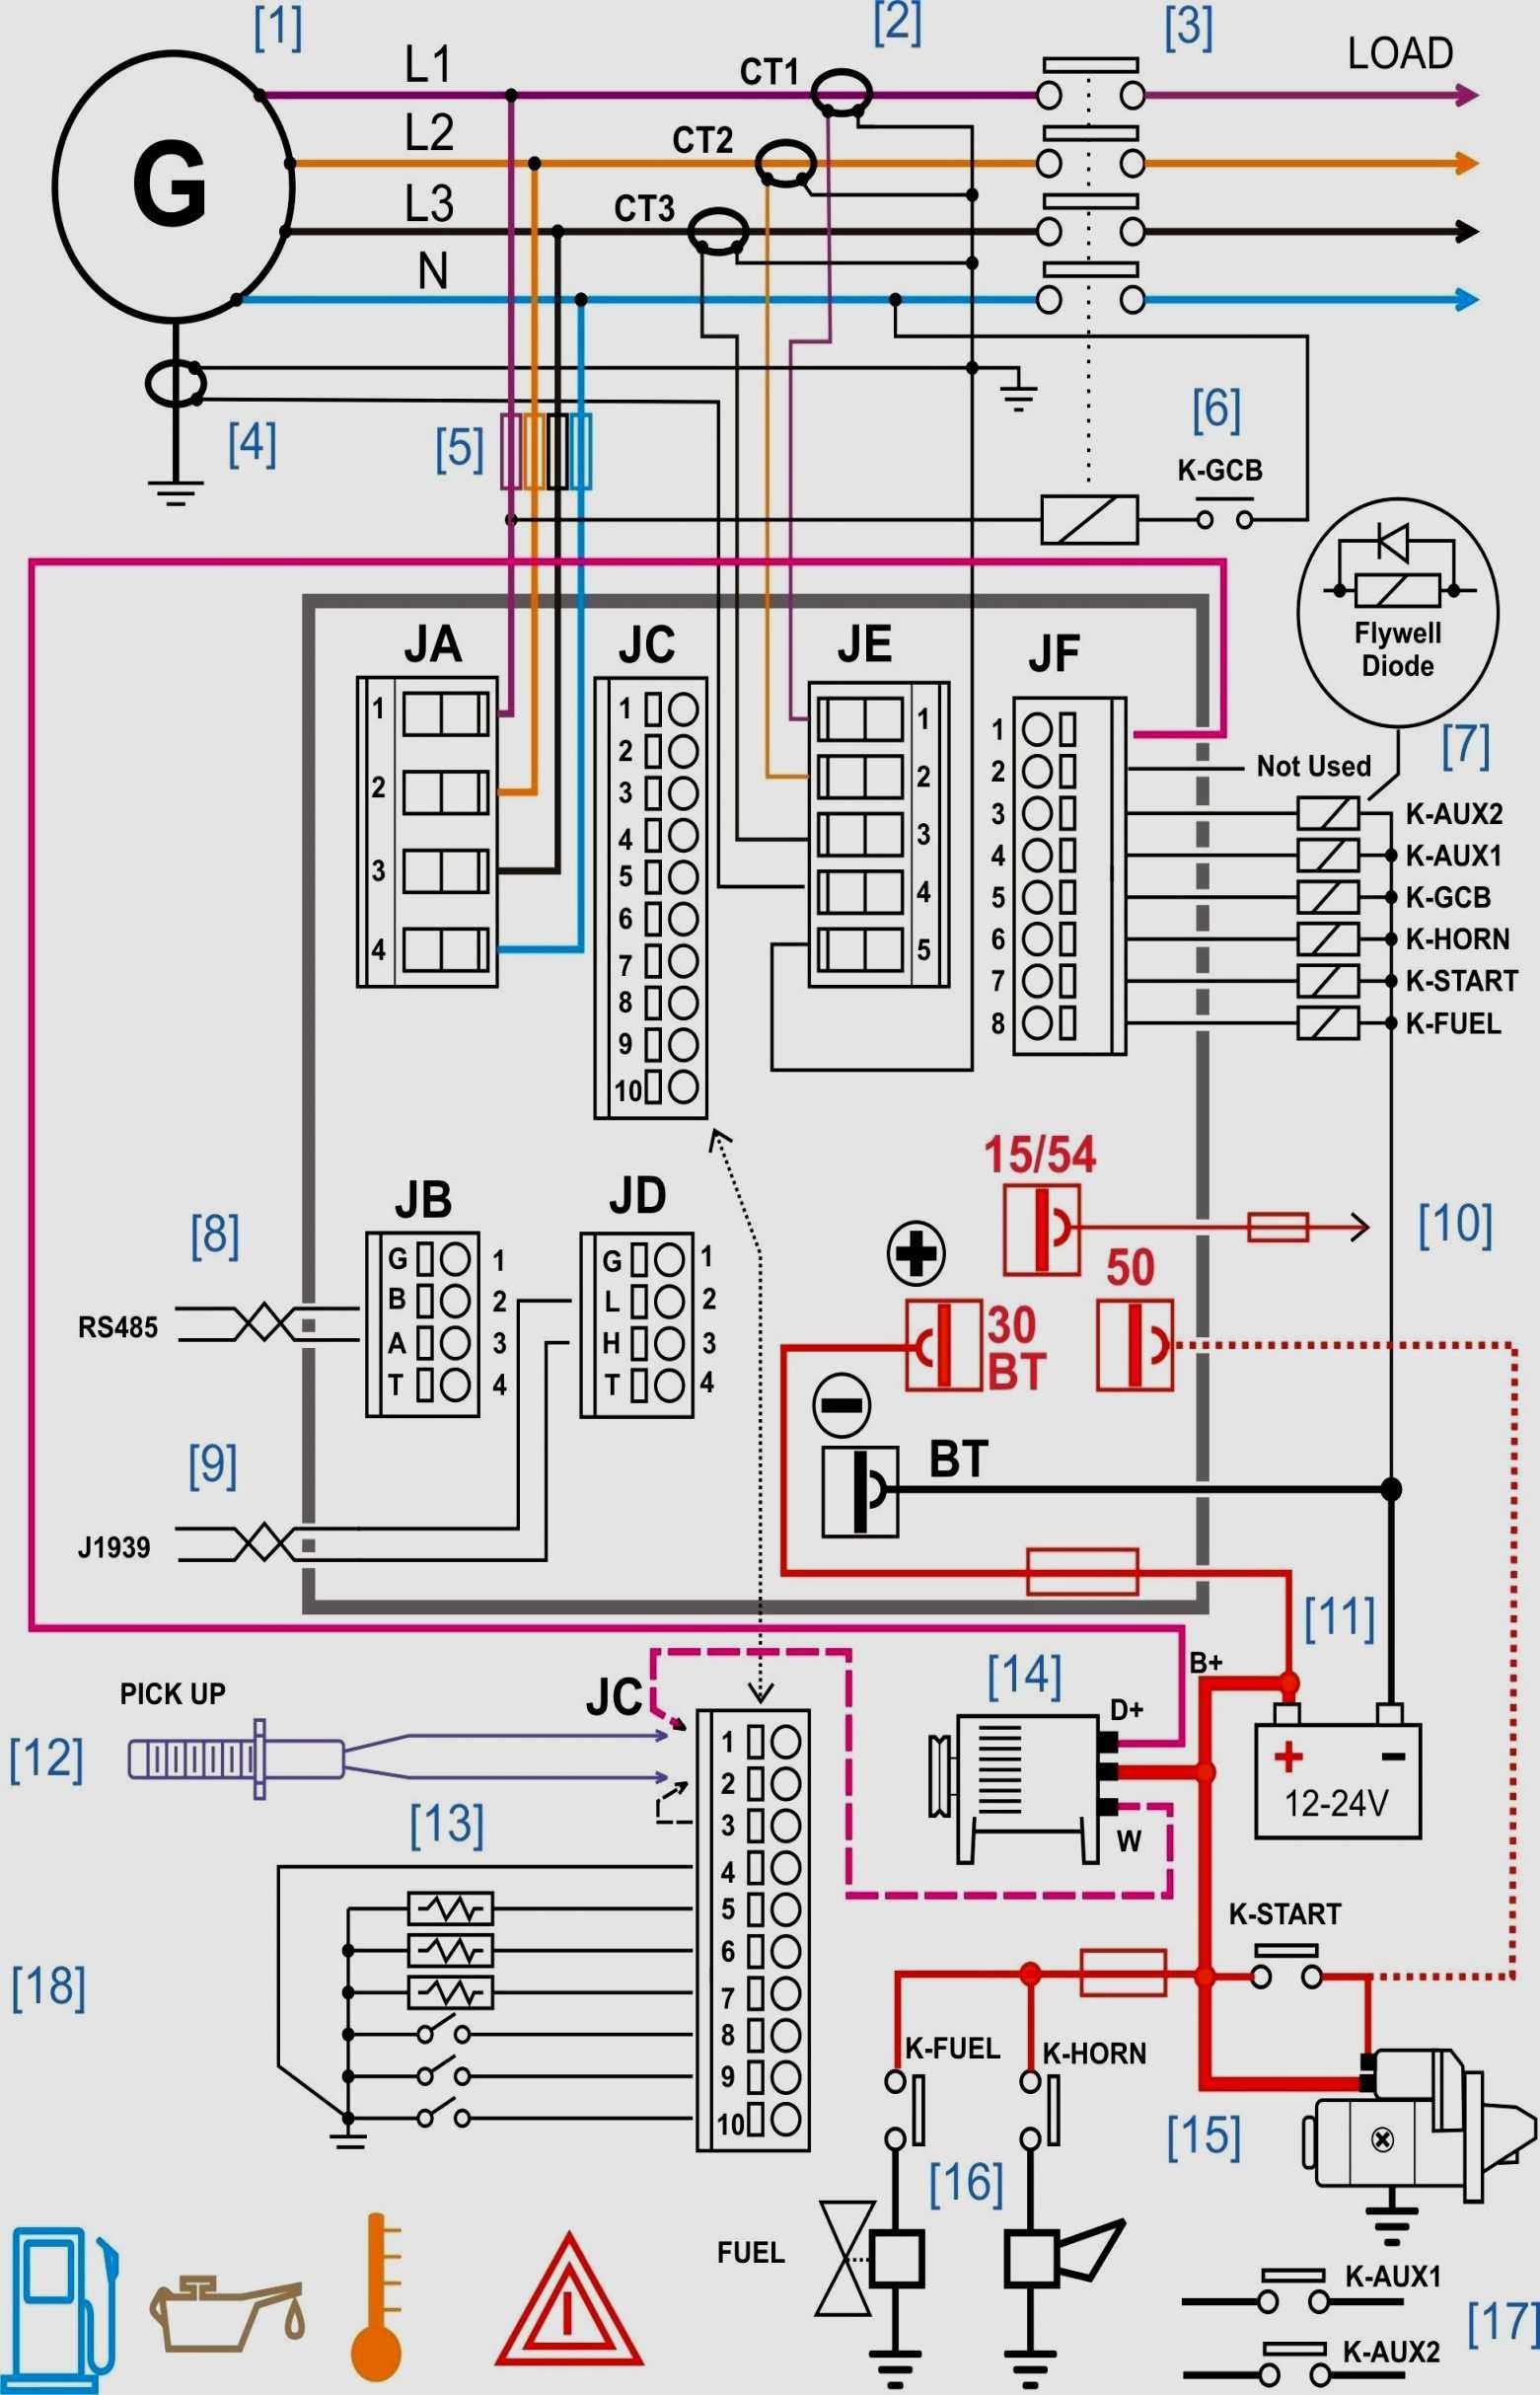 Car Audio Amplifier Wiring Diagram toyota Car Stereo Wiring Diagram Wiring Diagrams Of Car Audio Amplifier Wiring Diagram